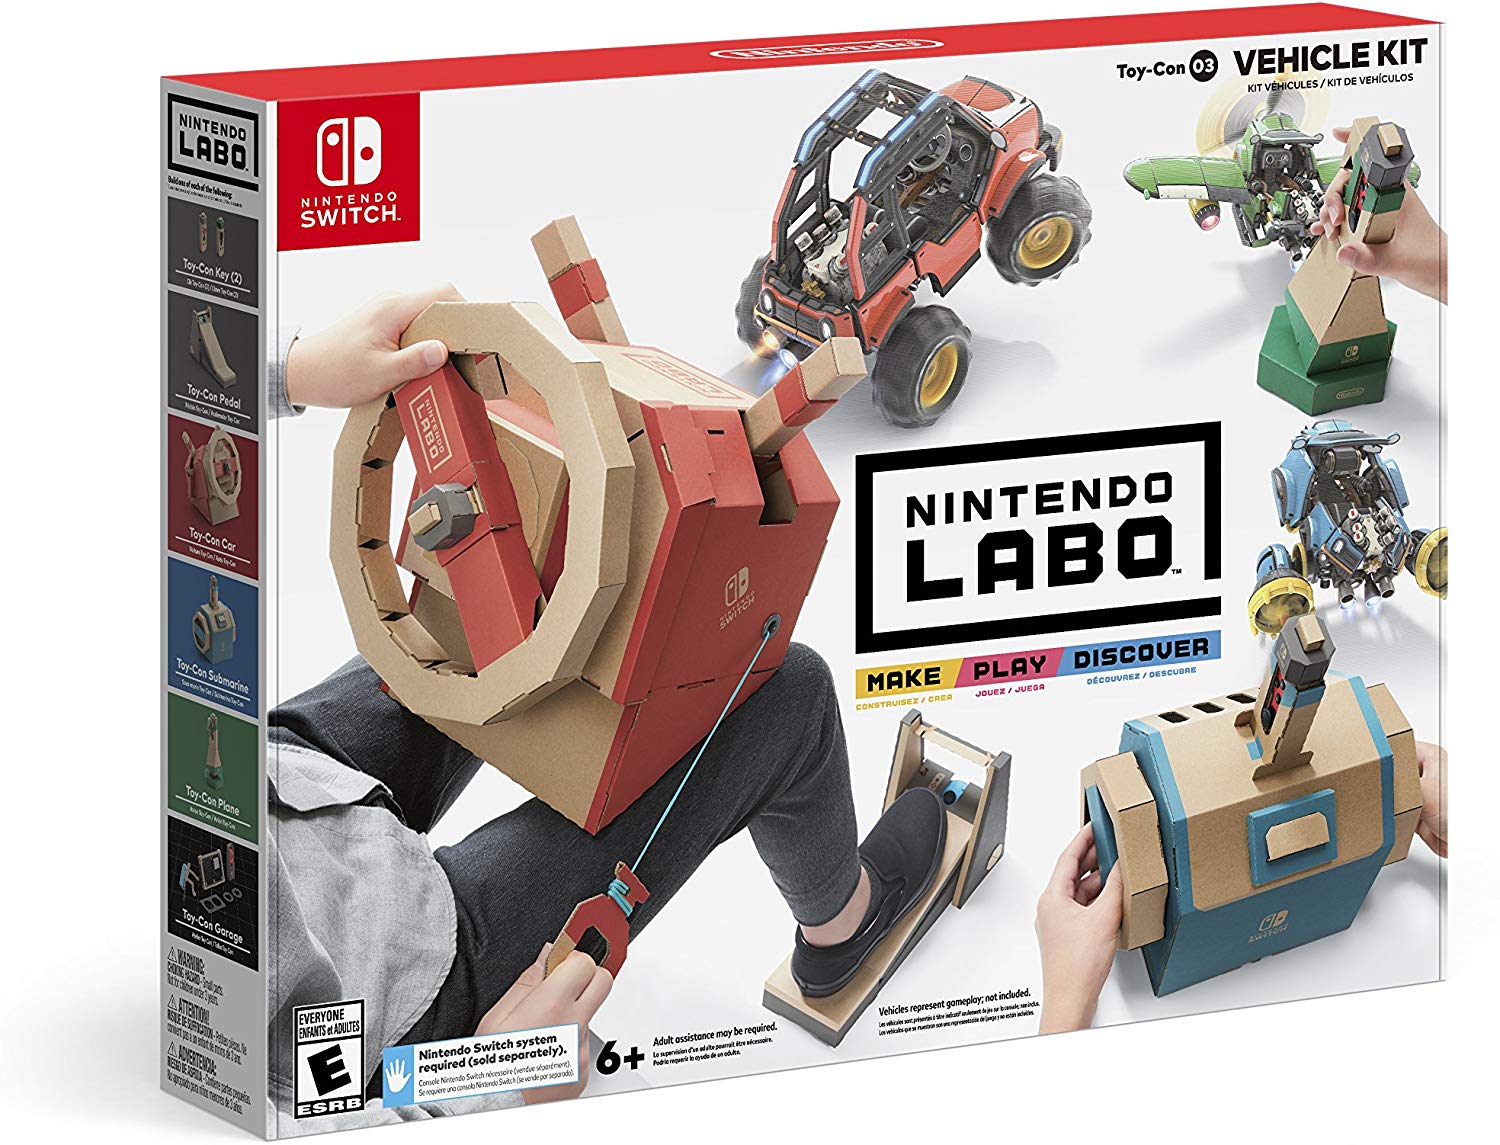 Nintendo Labo Vehicle Kit Toy-Con 3